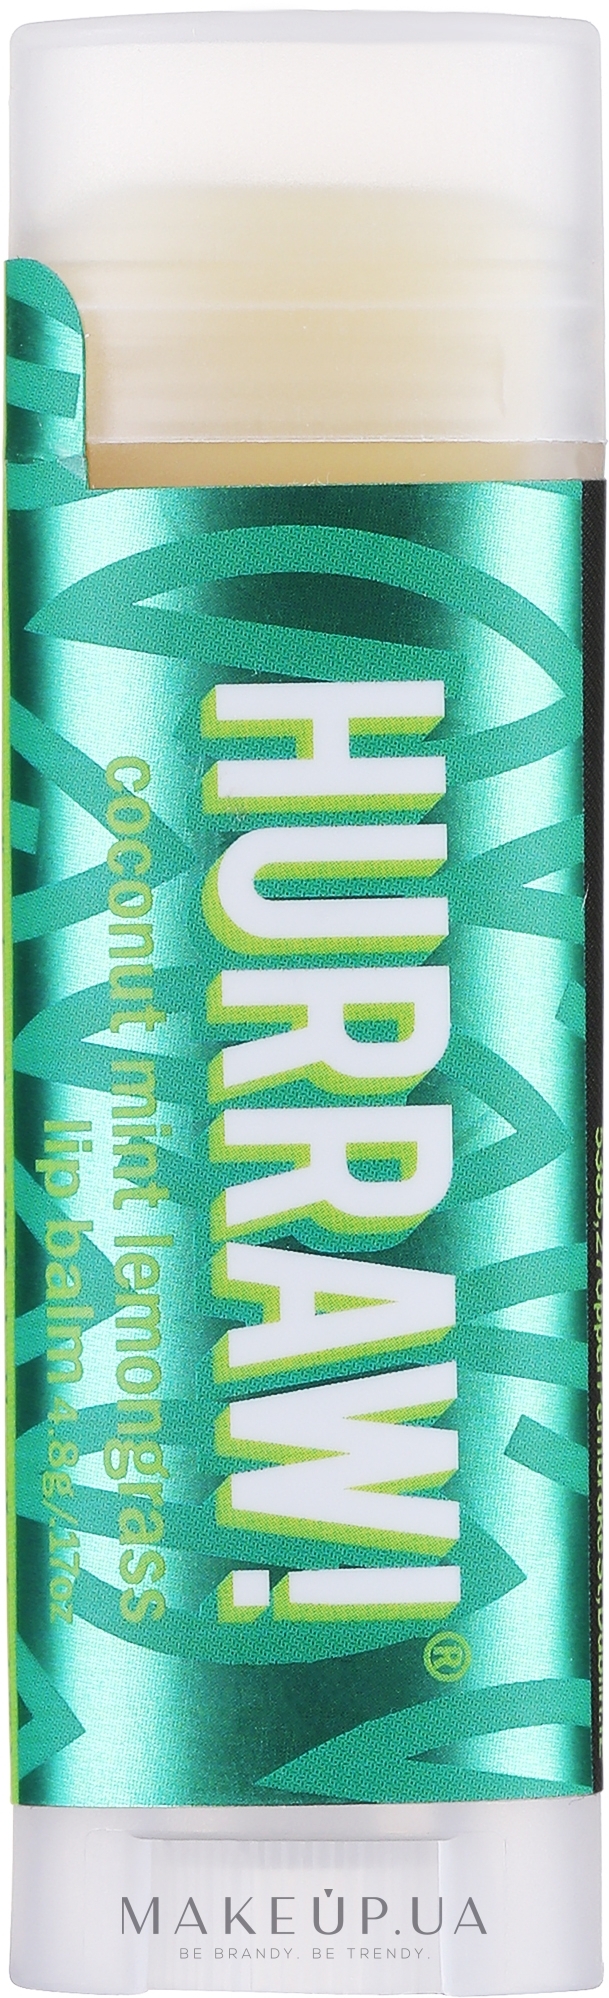 Бальзам для губ "Питта" - Hurraw! Pitta Lip Balm Limited Edition — фото 4.8g